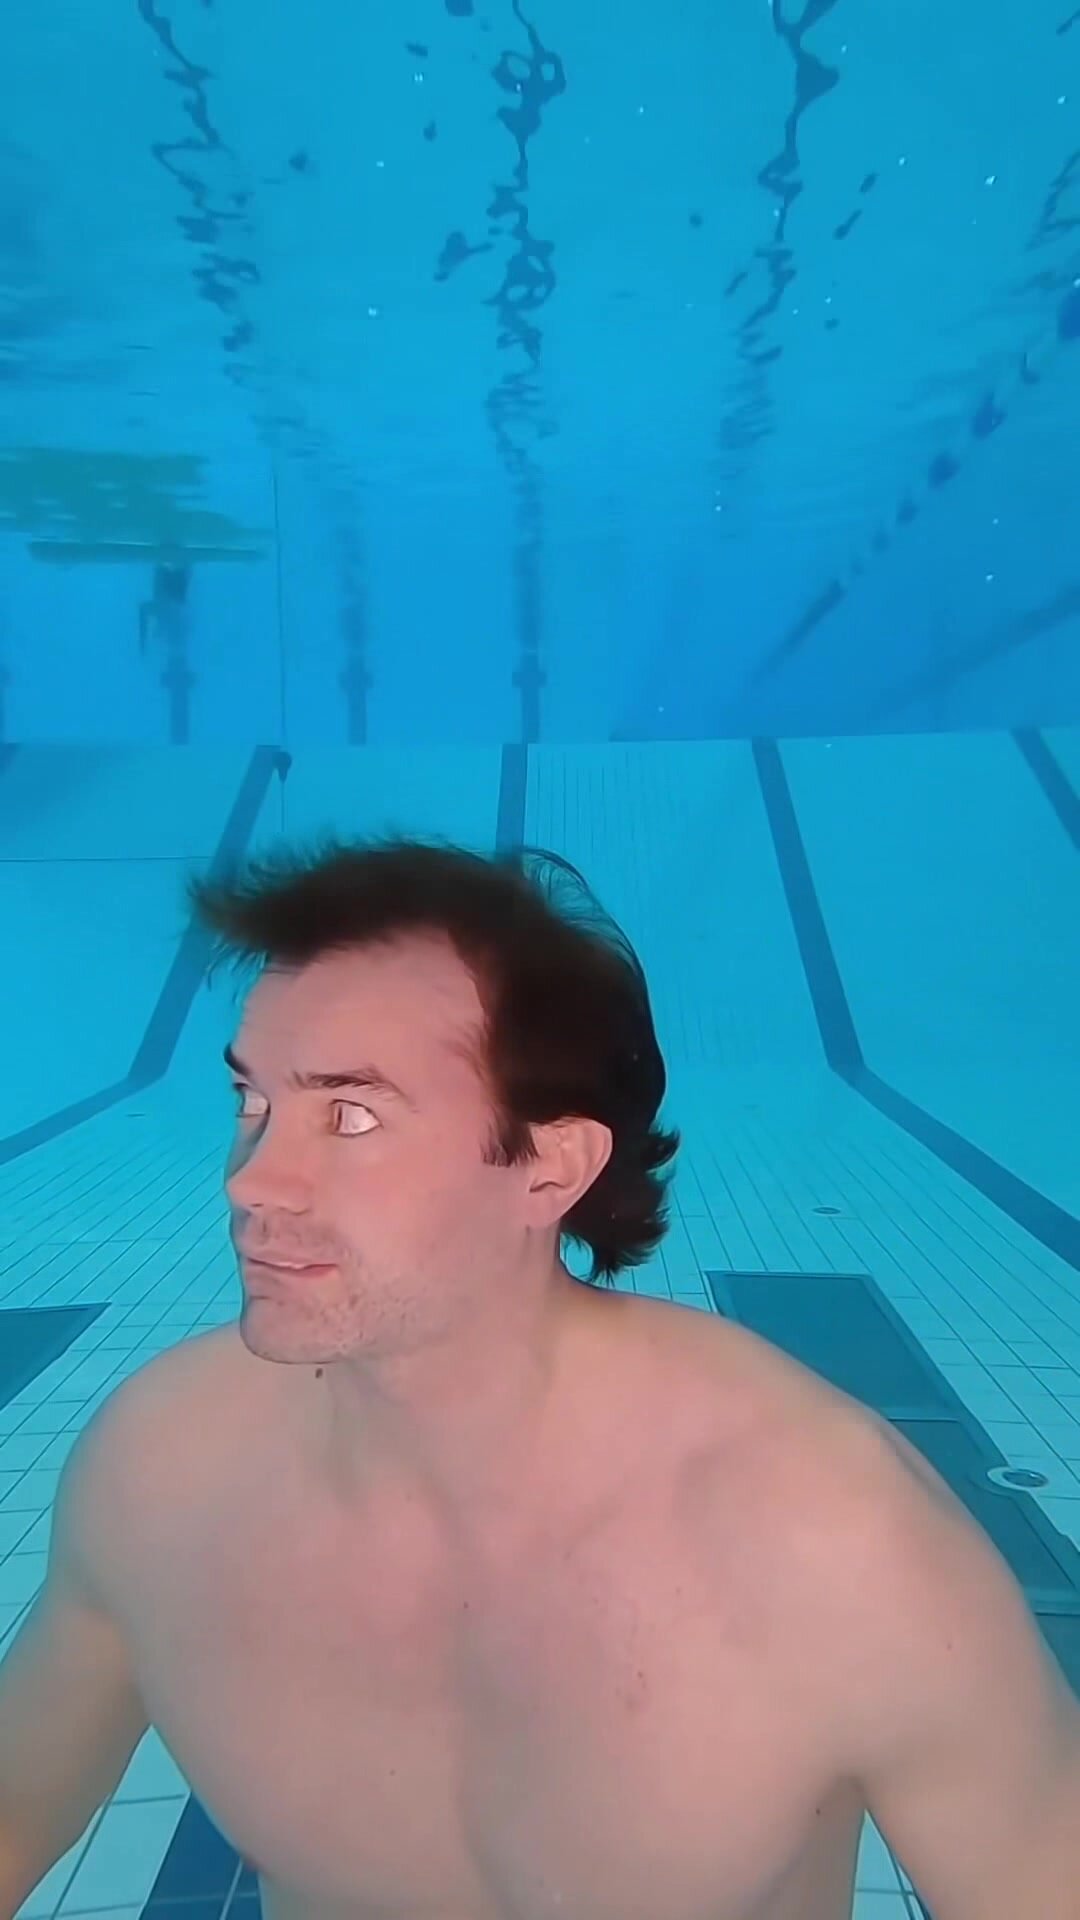 Breatholding barefaced underwater in pool - video 2